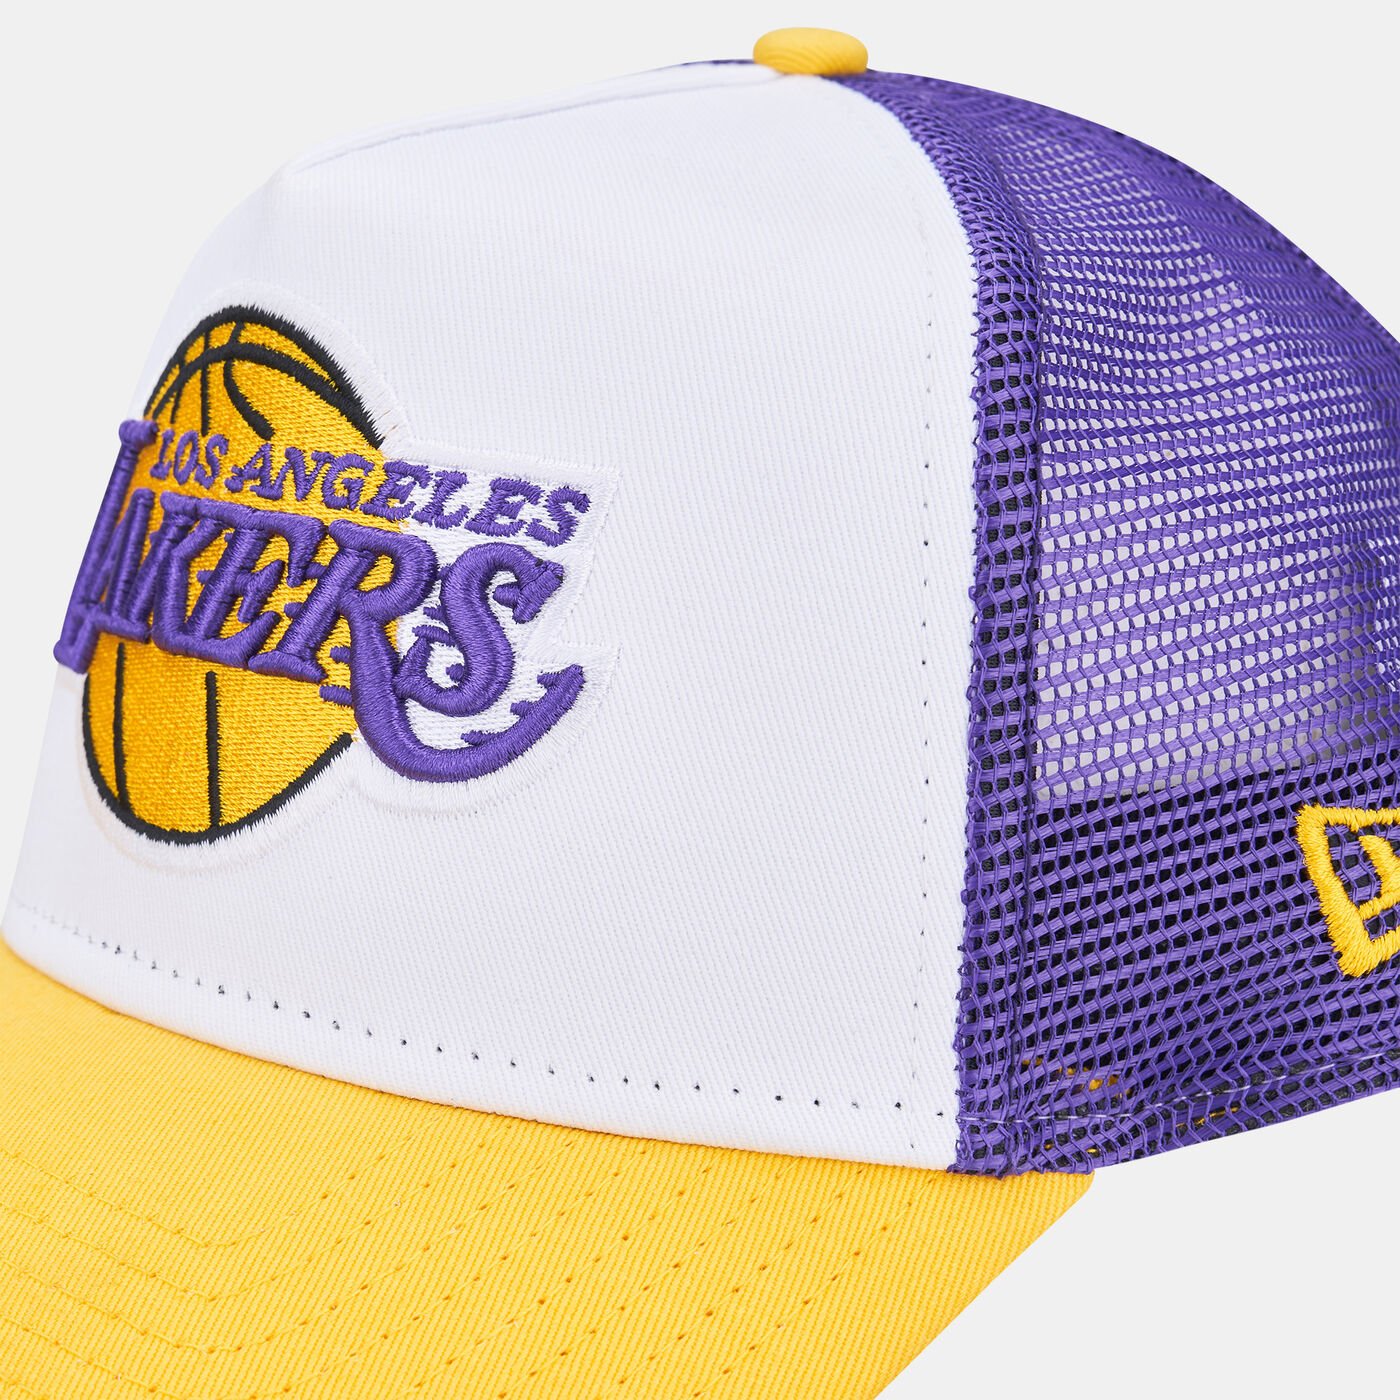 Men's NBA Los Angeles Lakers Trucker Cap